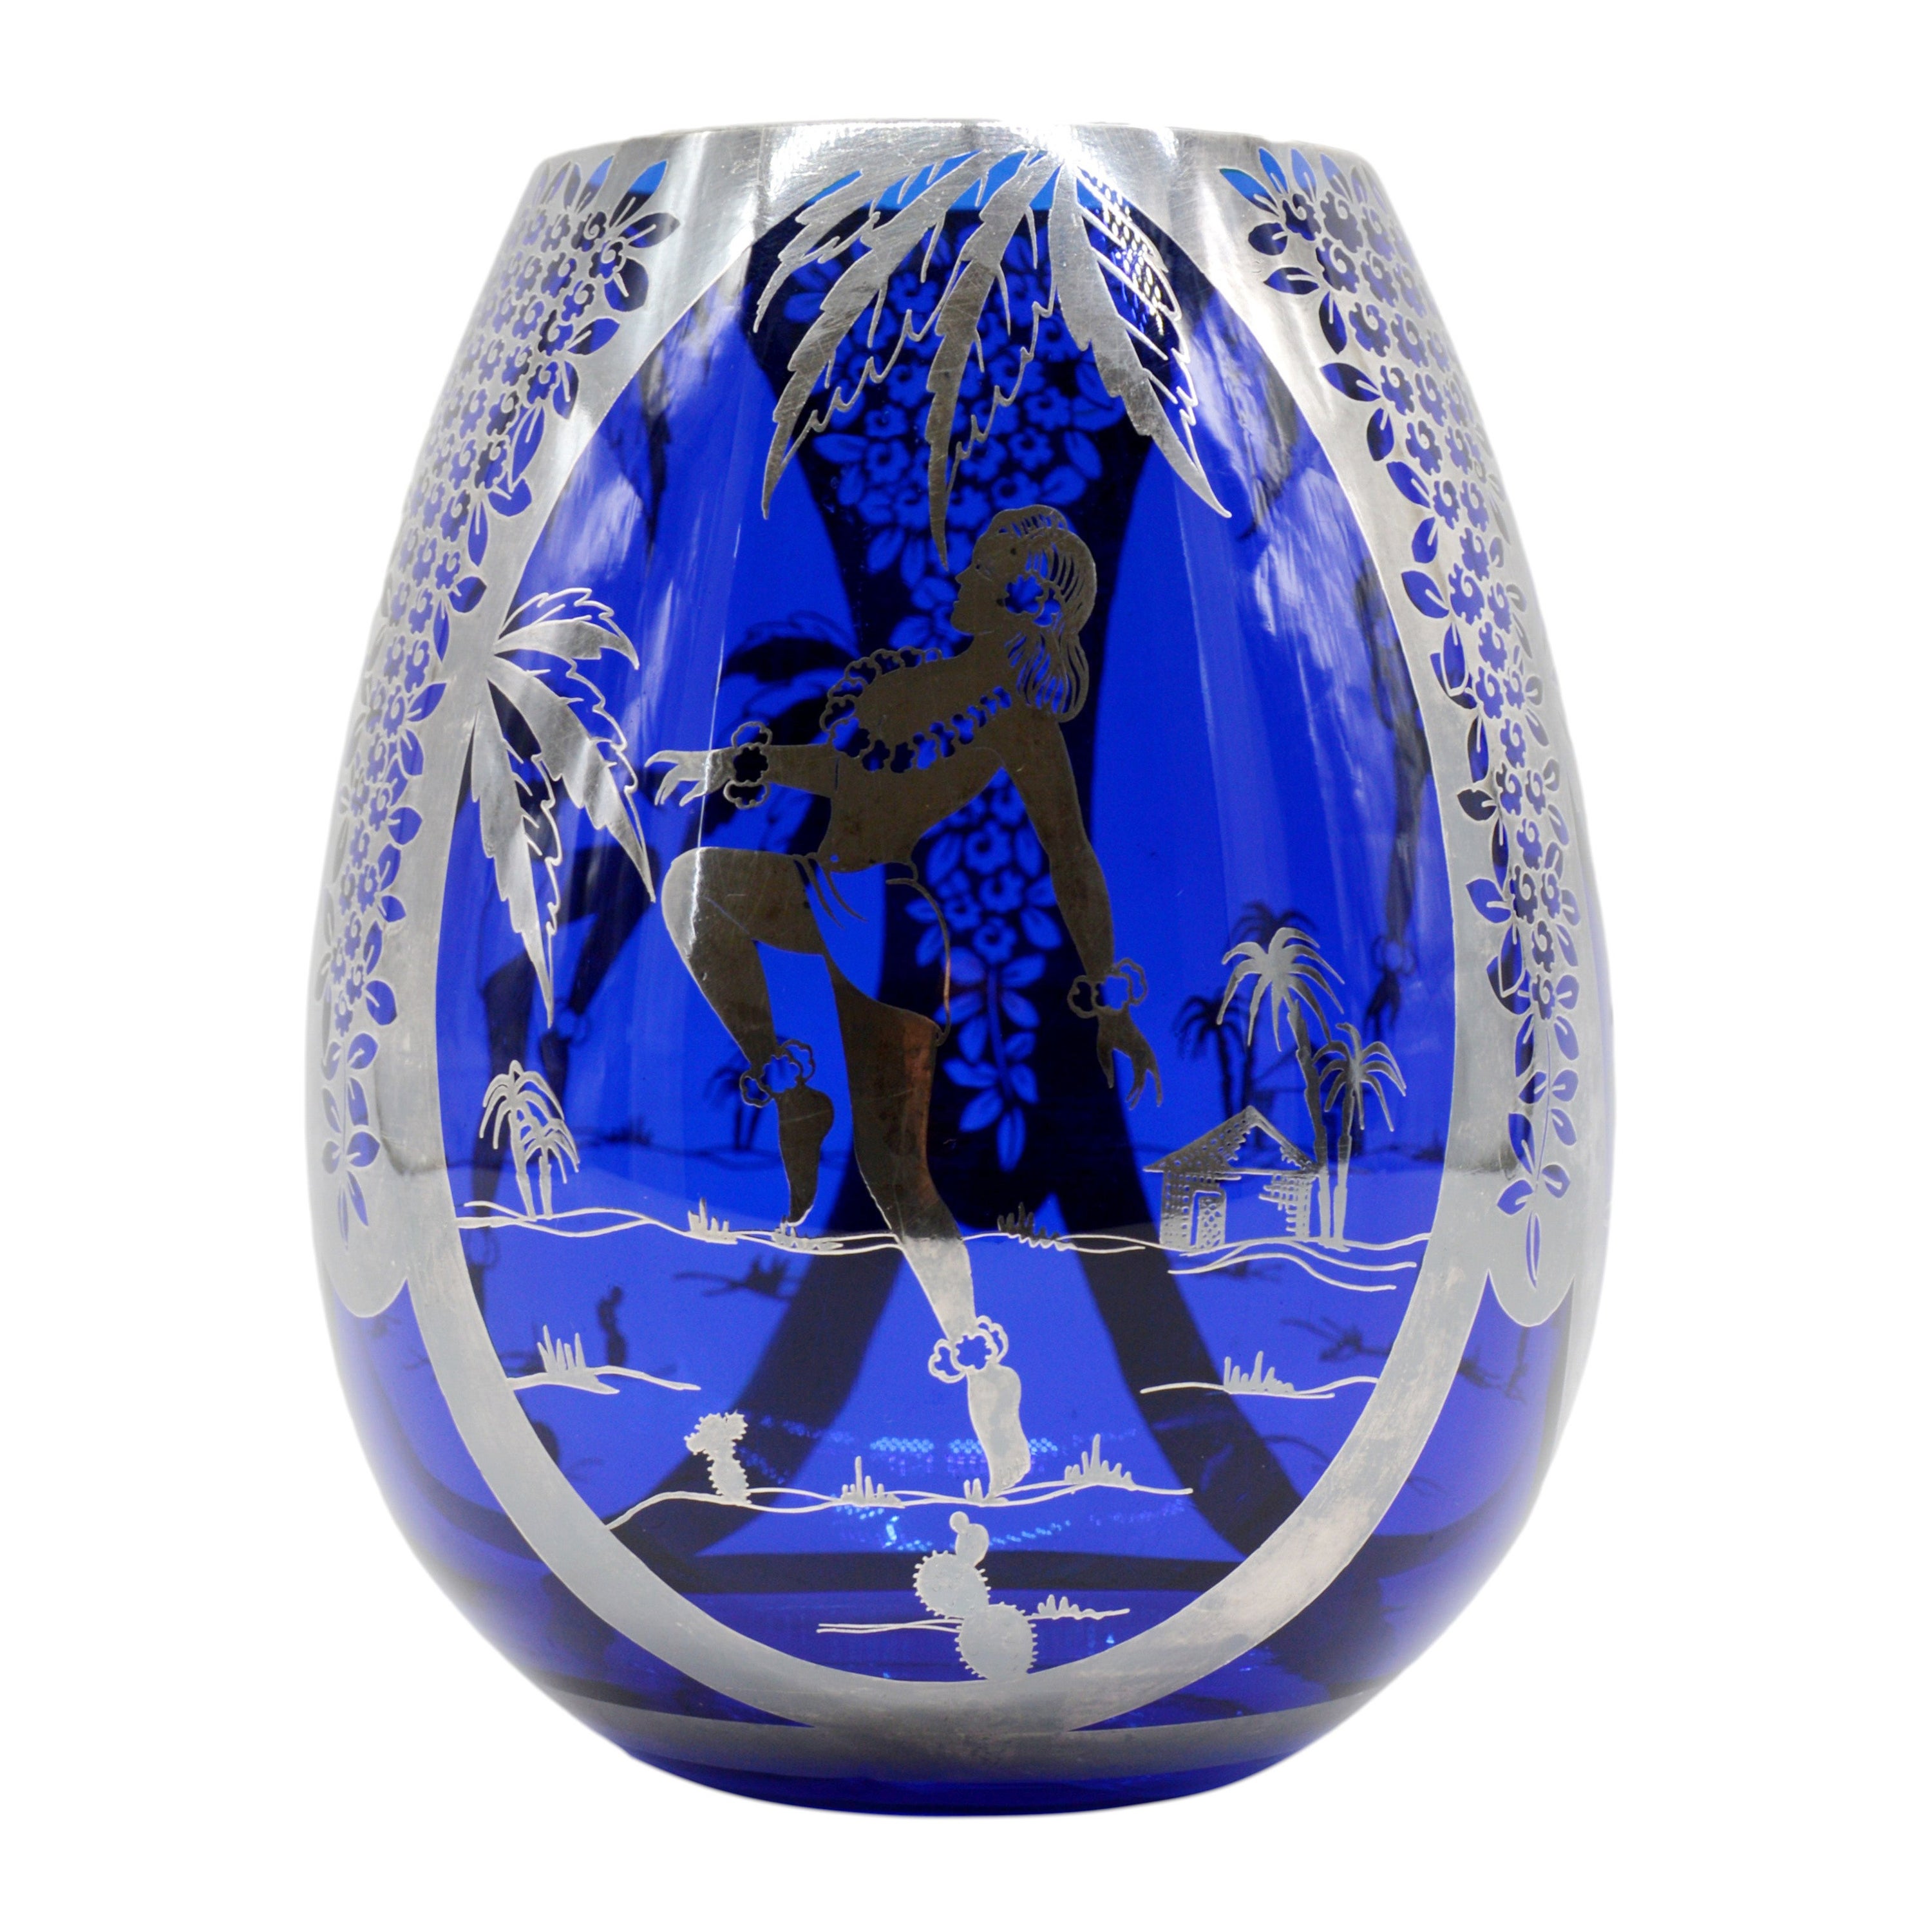 Hermann Michel French Art Deco Glass Vase, 1930